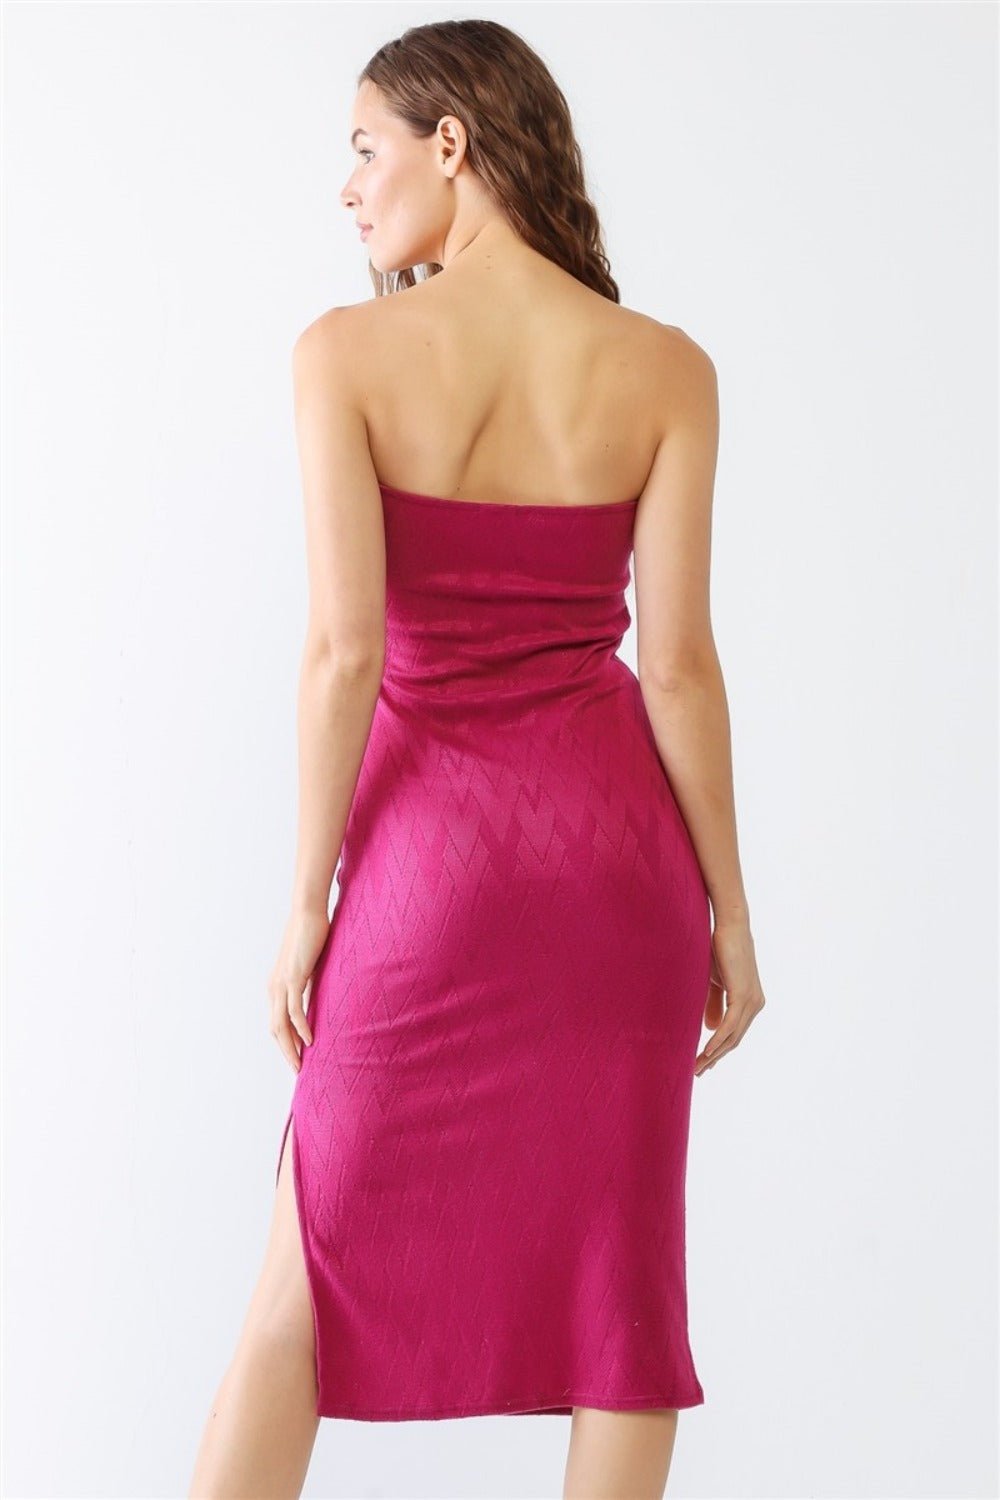 Le Lis Geometric Print Strapless Side Slit Dress - Happily Ever Atchison Shop Co.